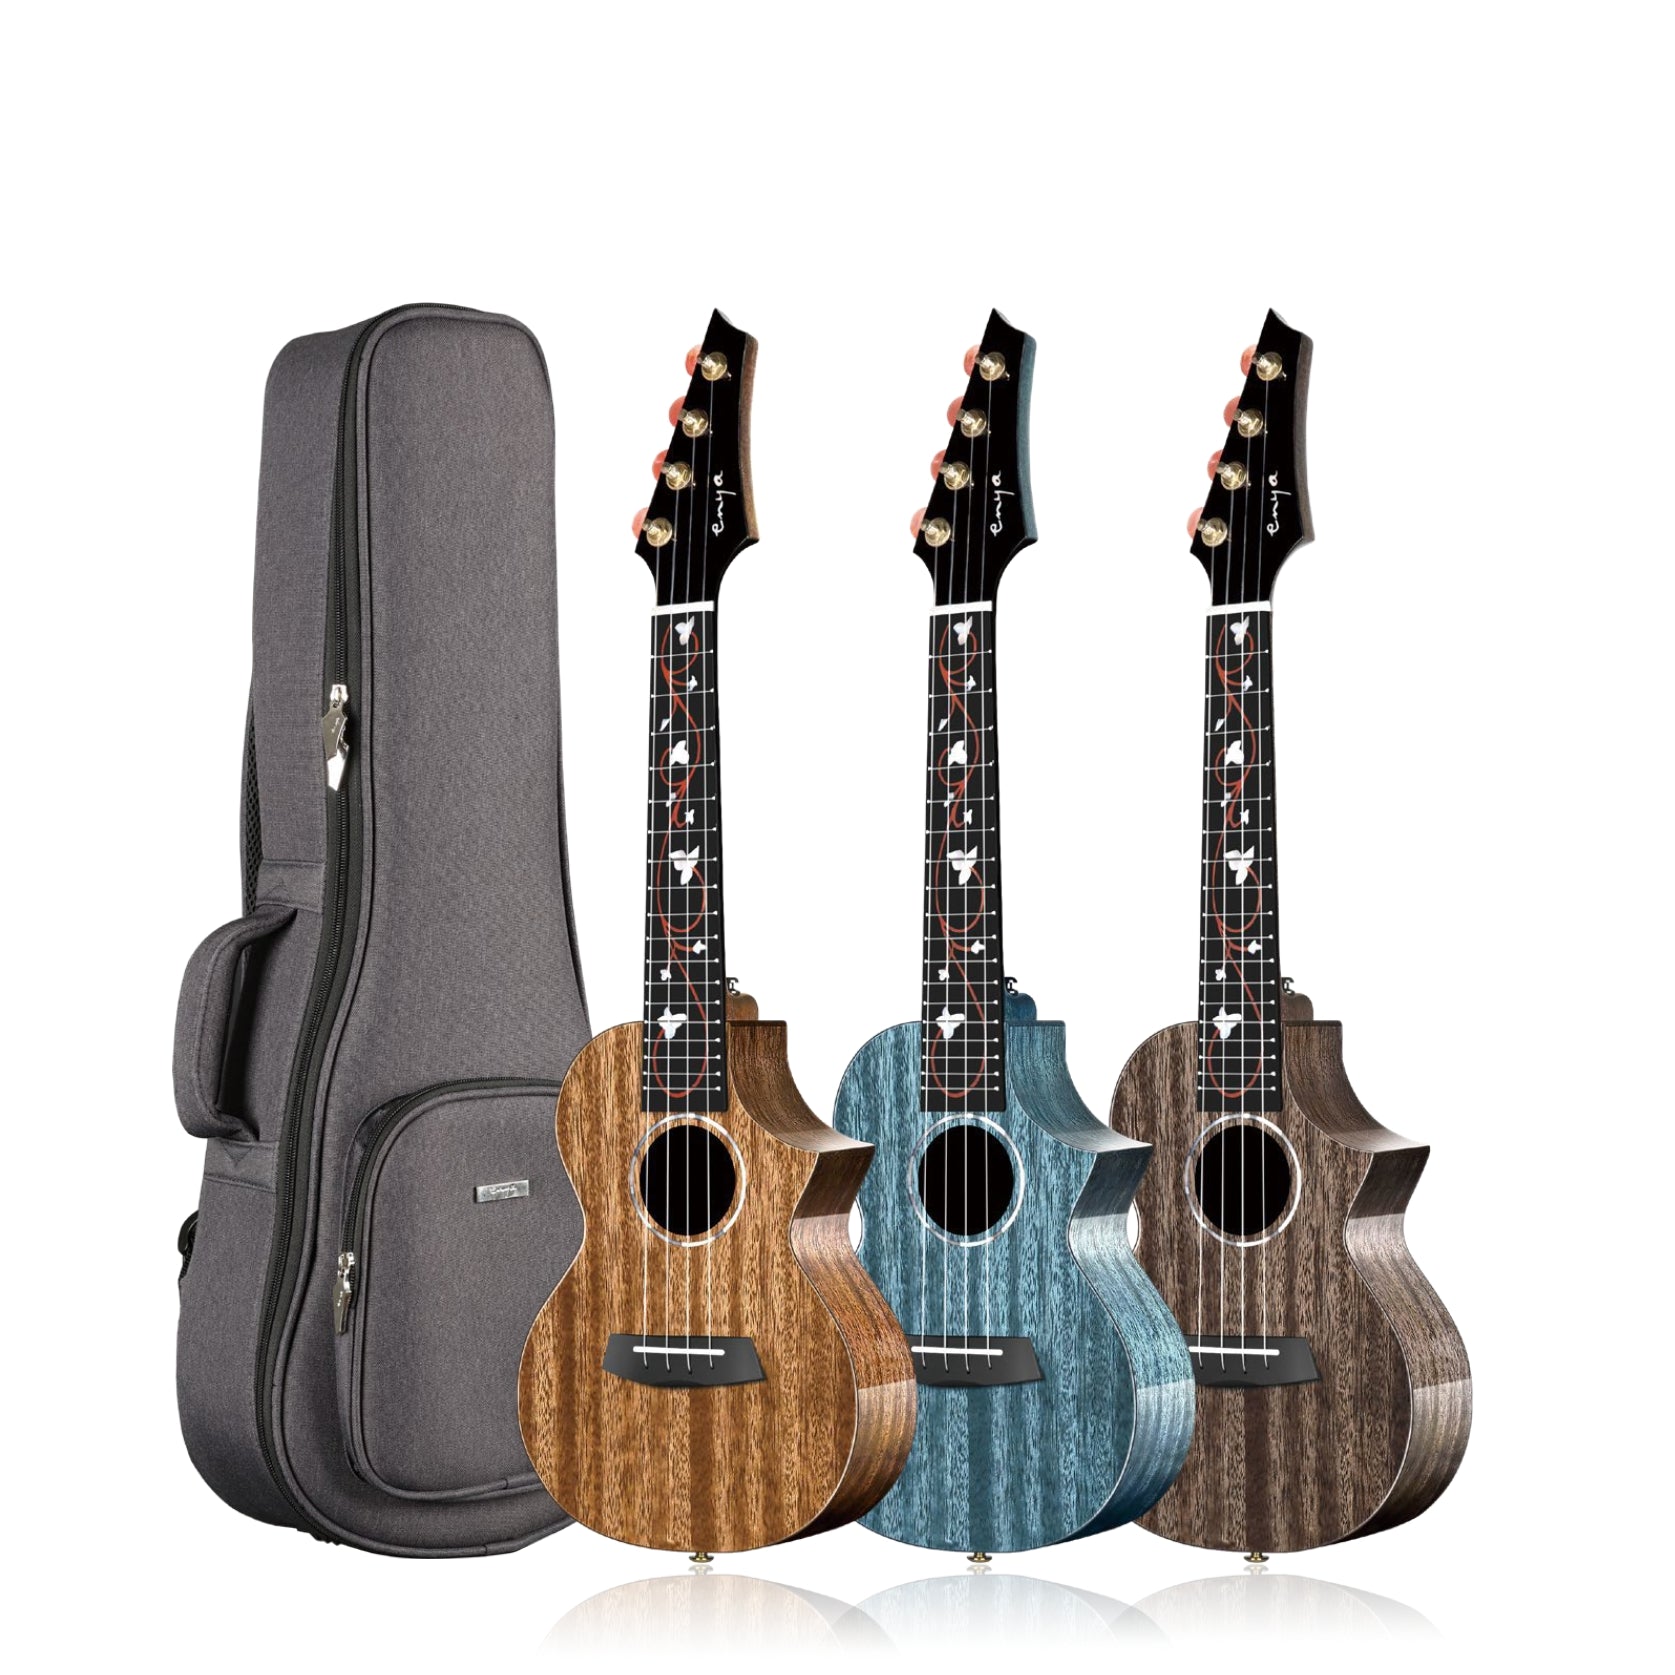 M6, Luxury-grade solid wood ukulele